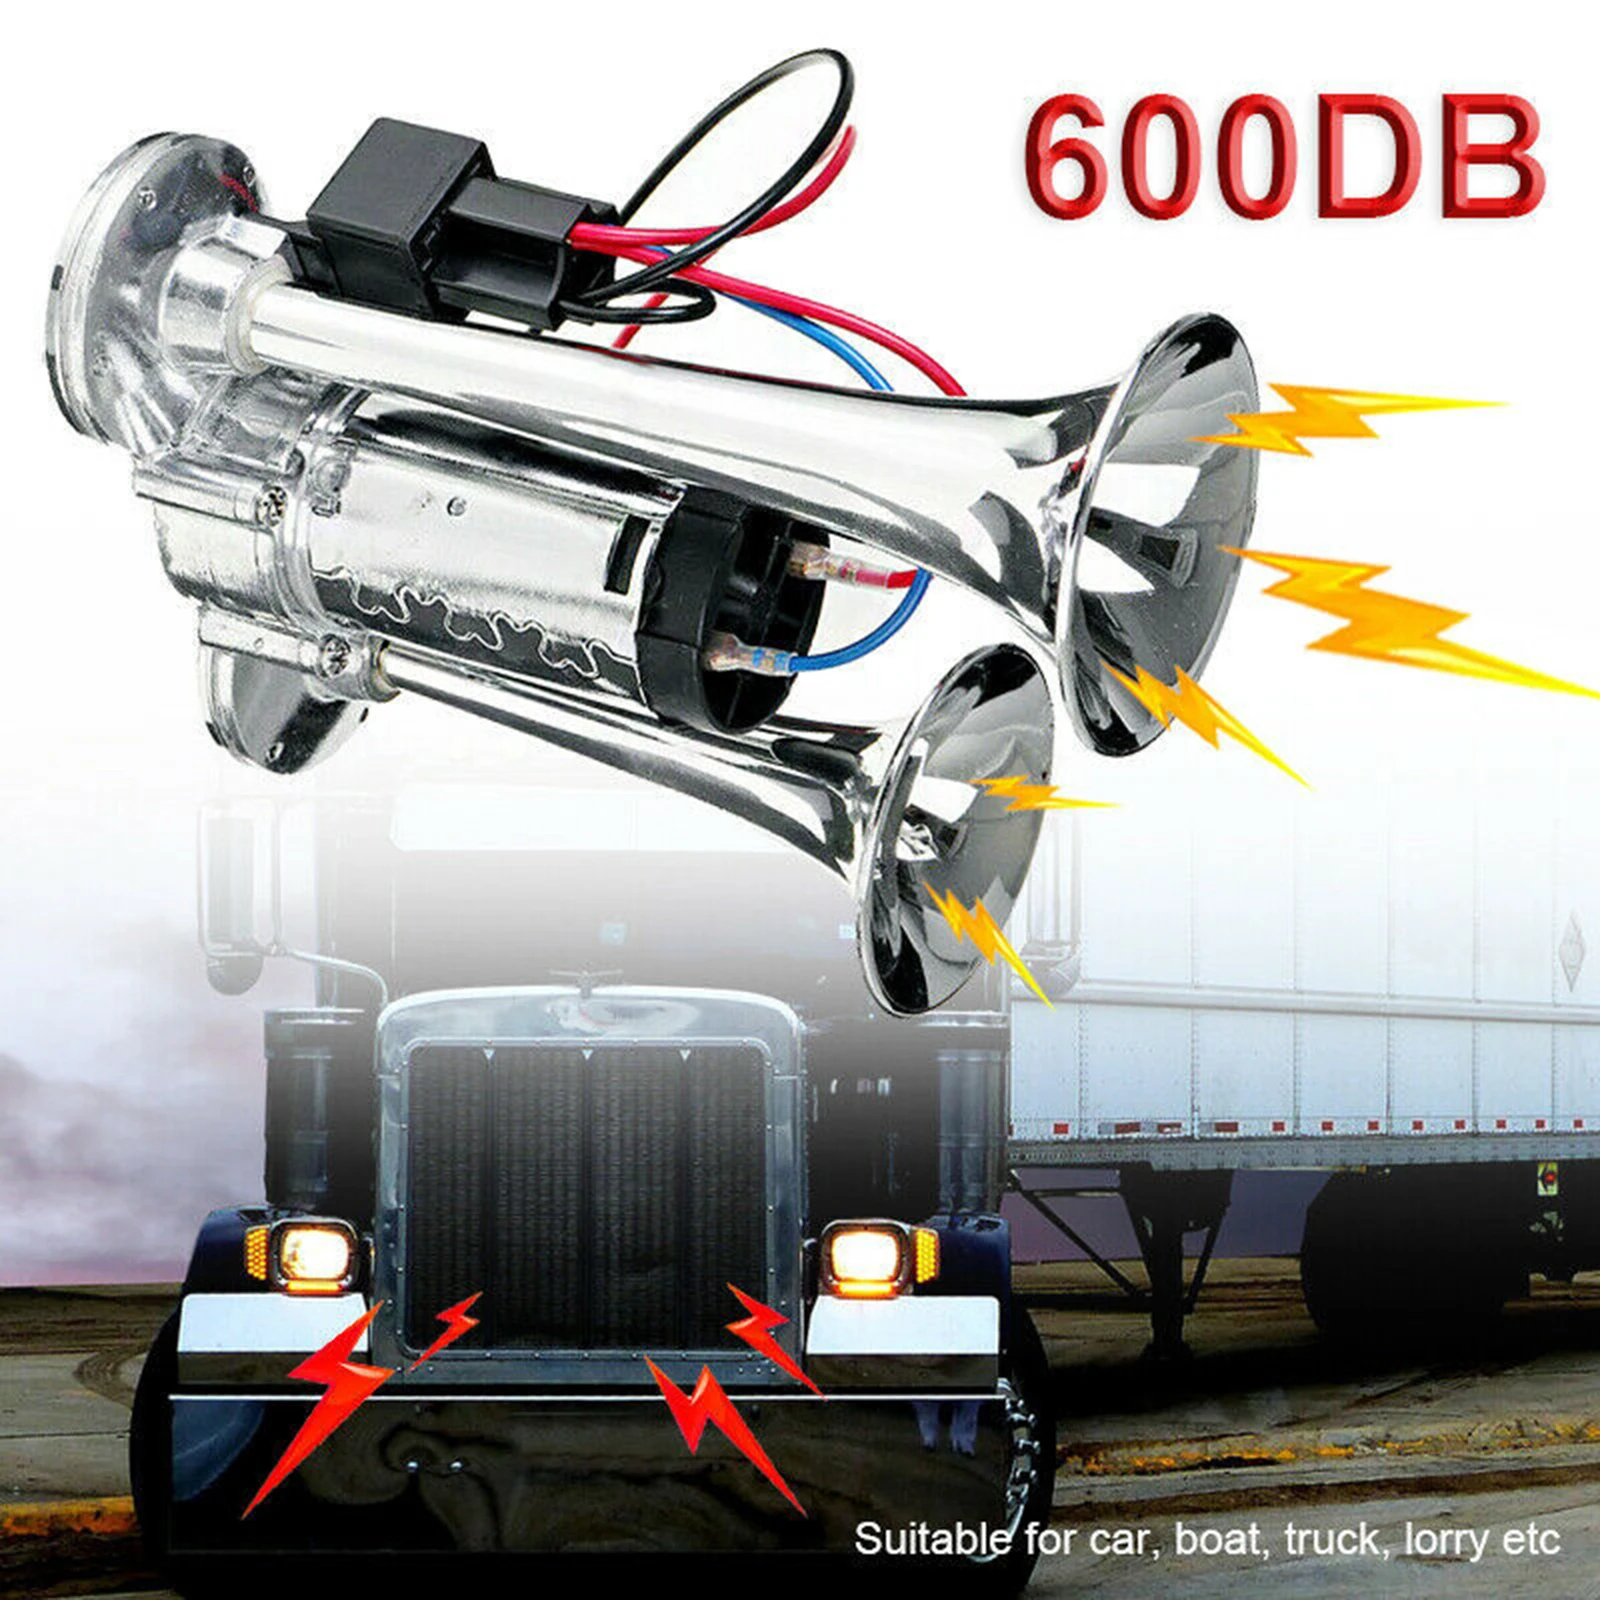 Silver 600DB 12V Dual Trumpet Car Electric Horn Kit Train Motorcycle Speaker